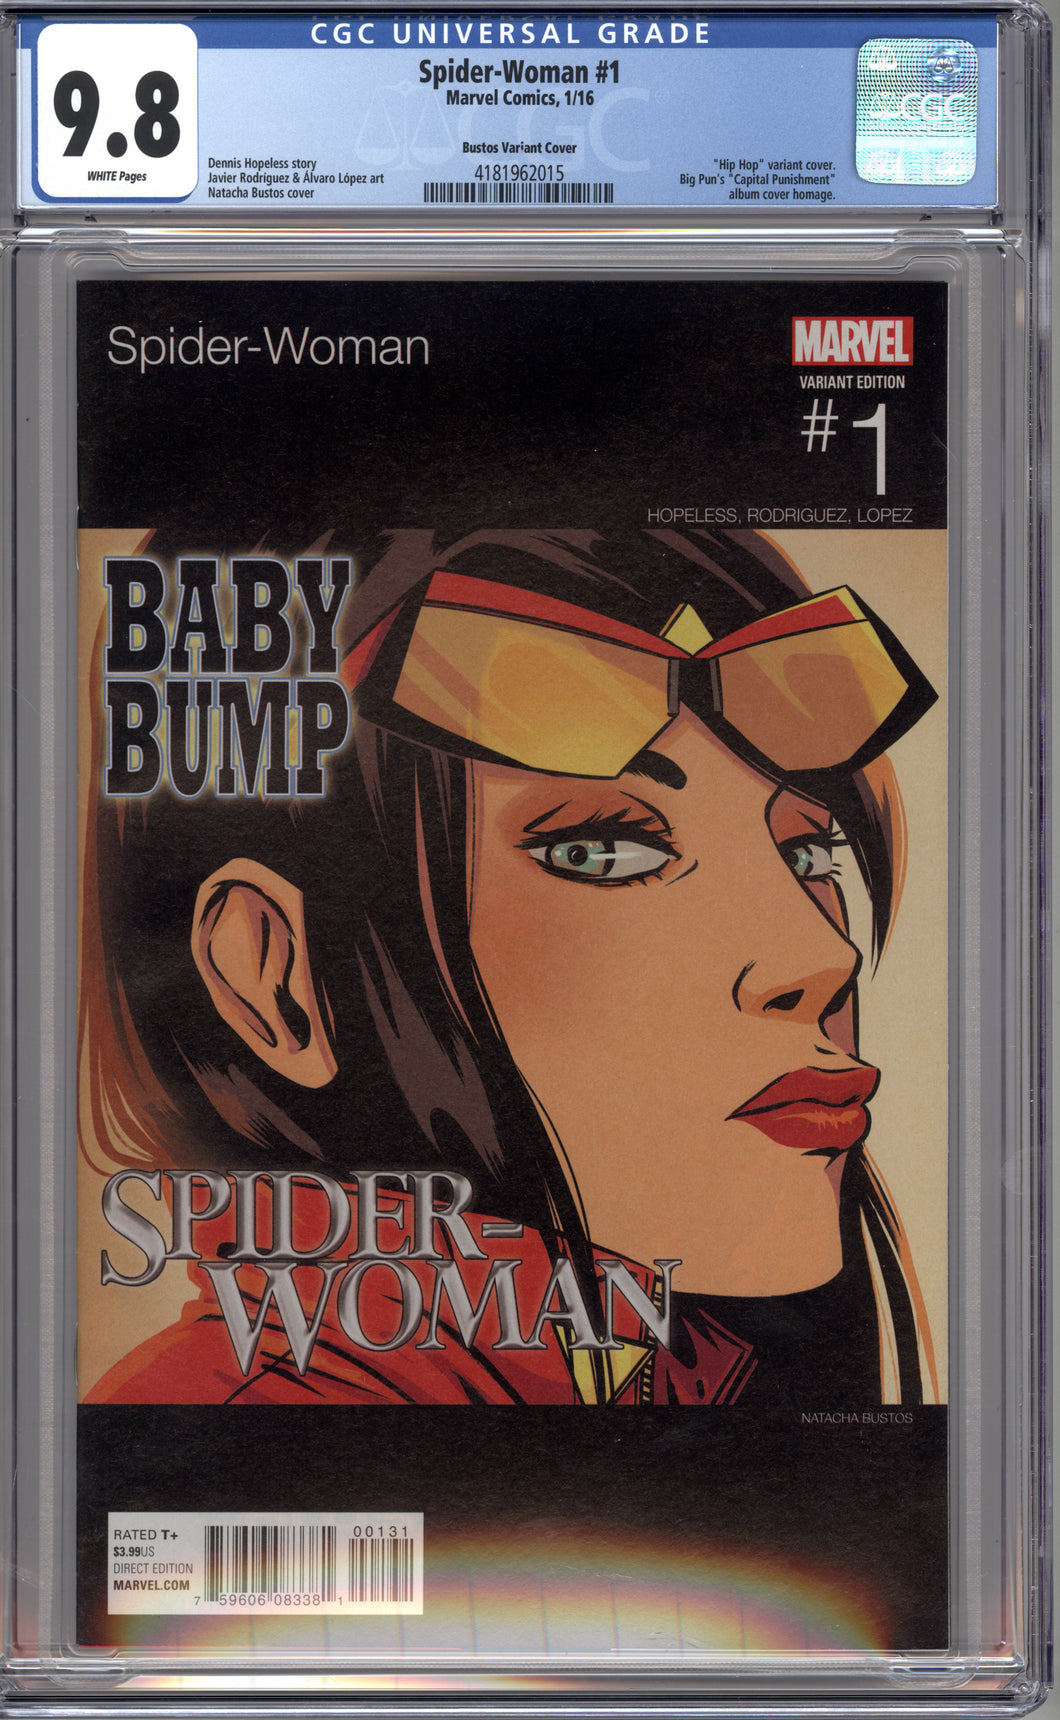 SPIDER-WOMAN #1 (2016 Marvel) CGC 9.8 NM/M BUSTOS HIP-HOP VARIANT